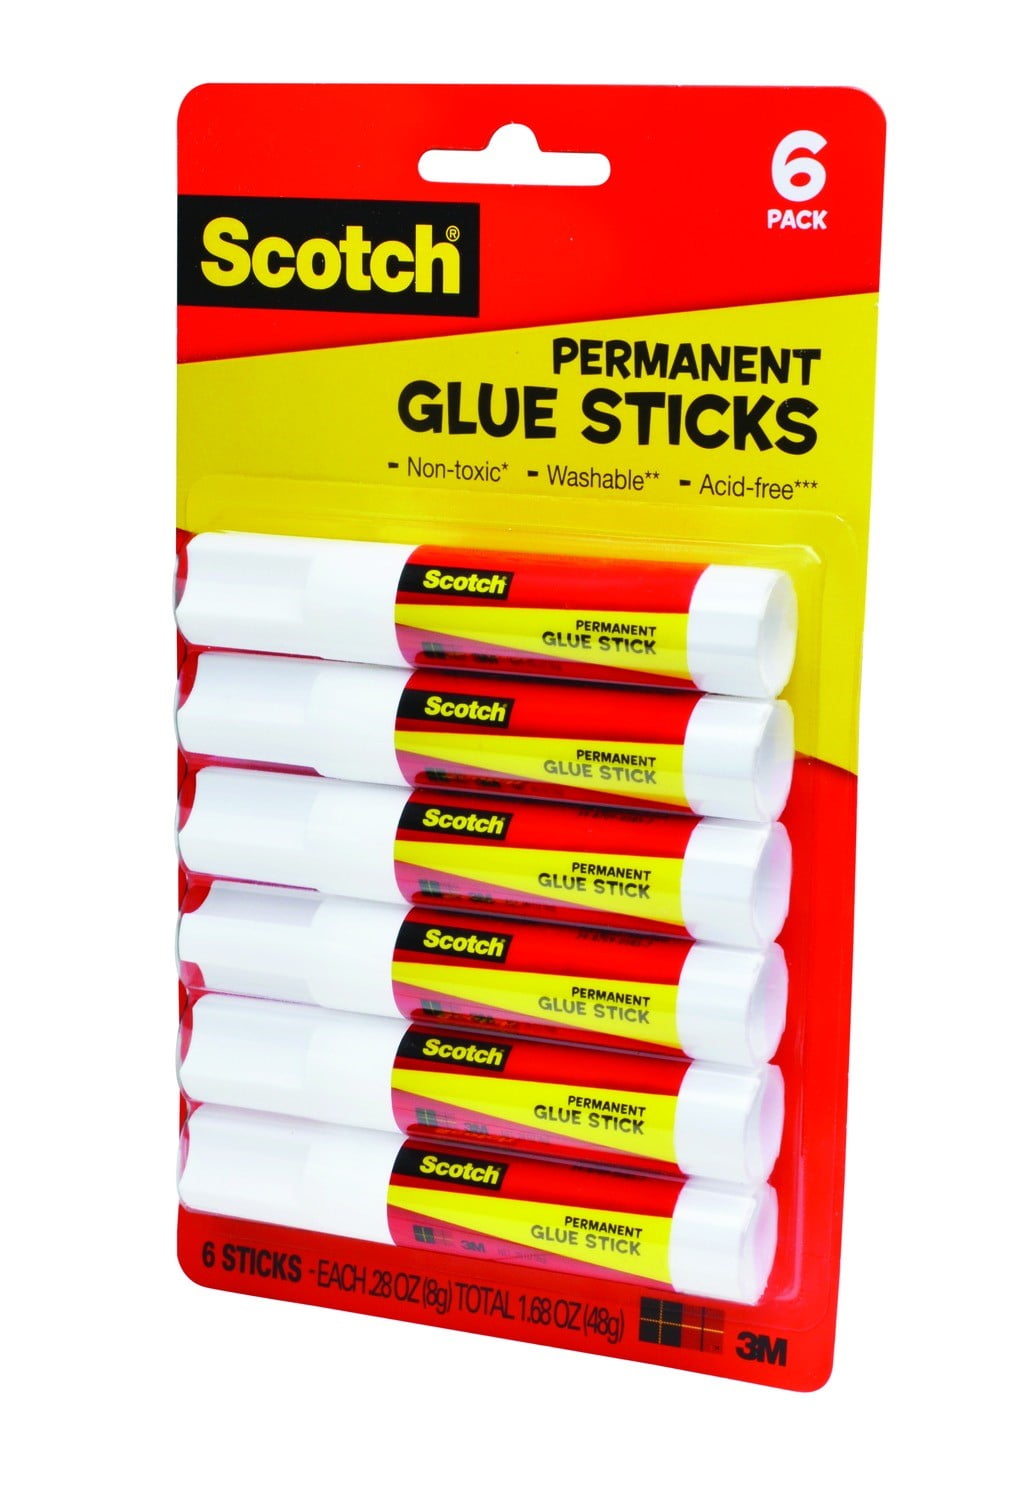 Scotch scotch repositionable glue stick, 0.49 oz, non-toxic and